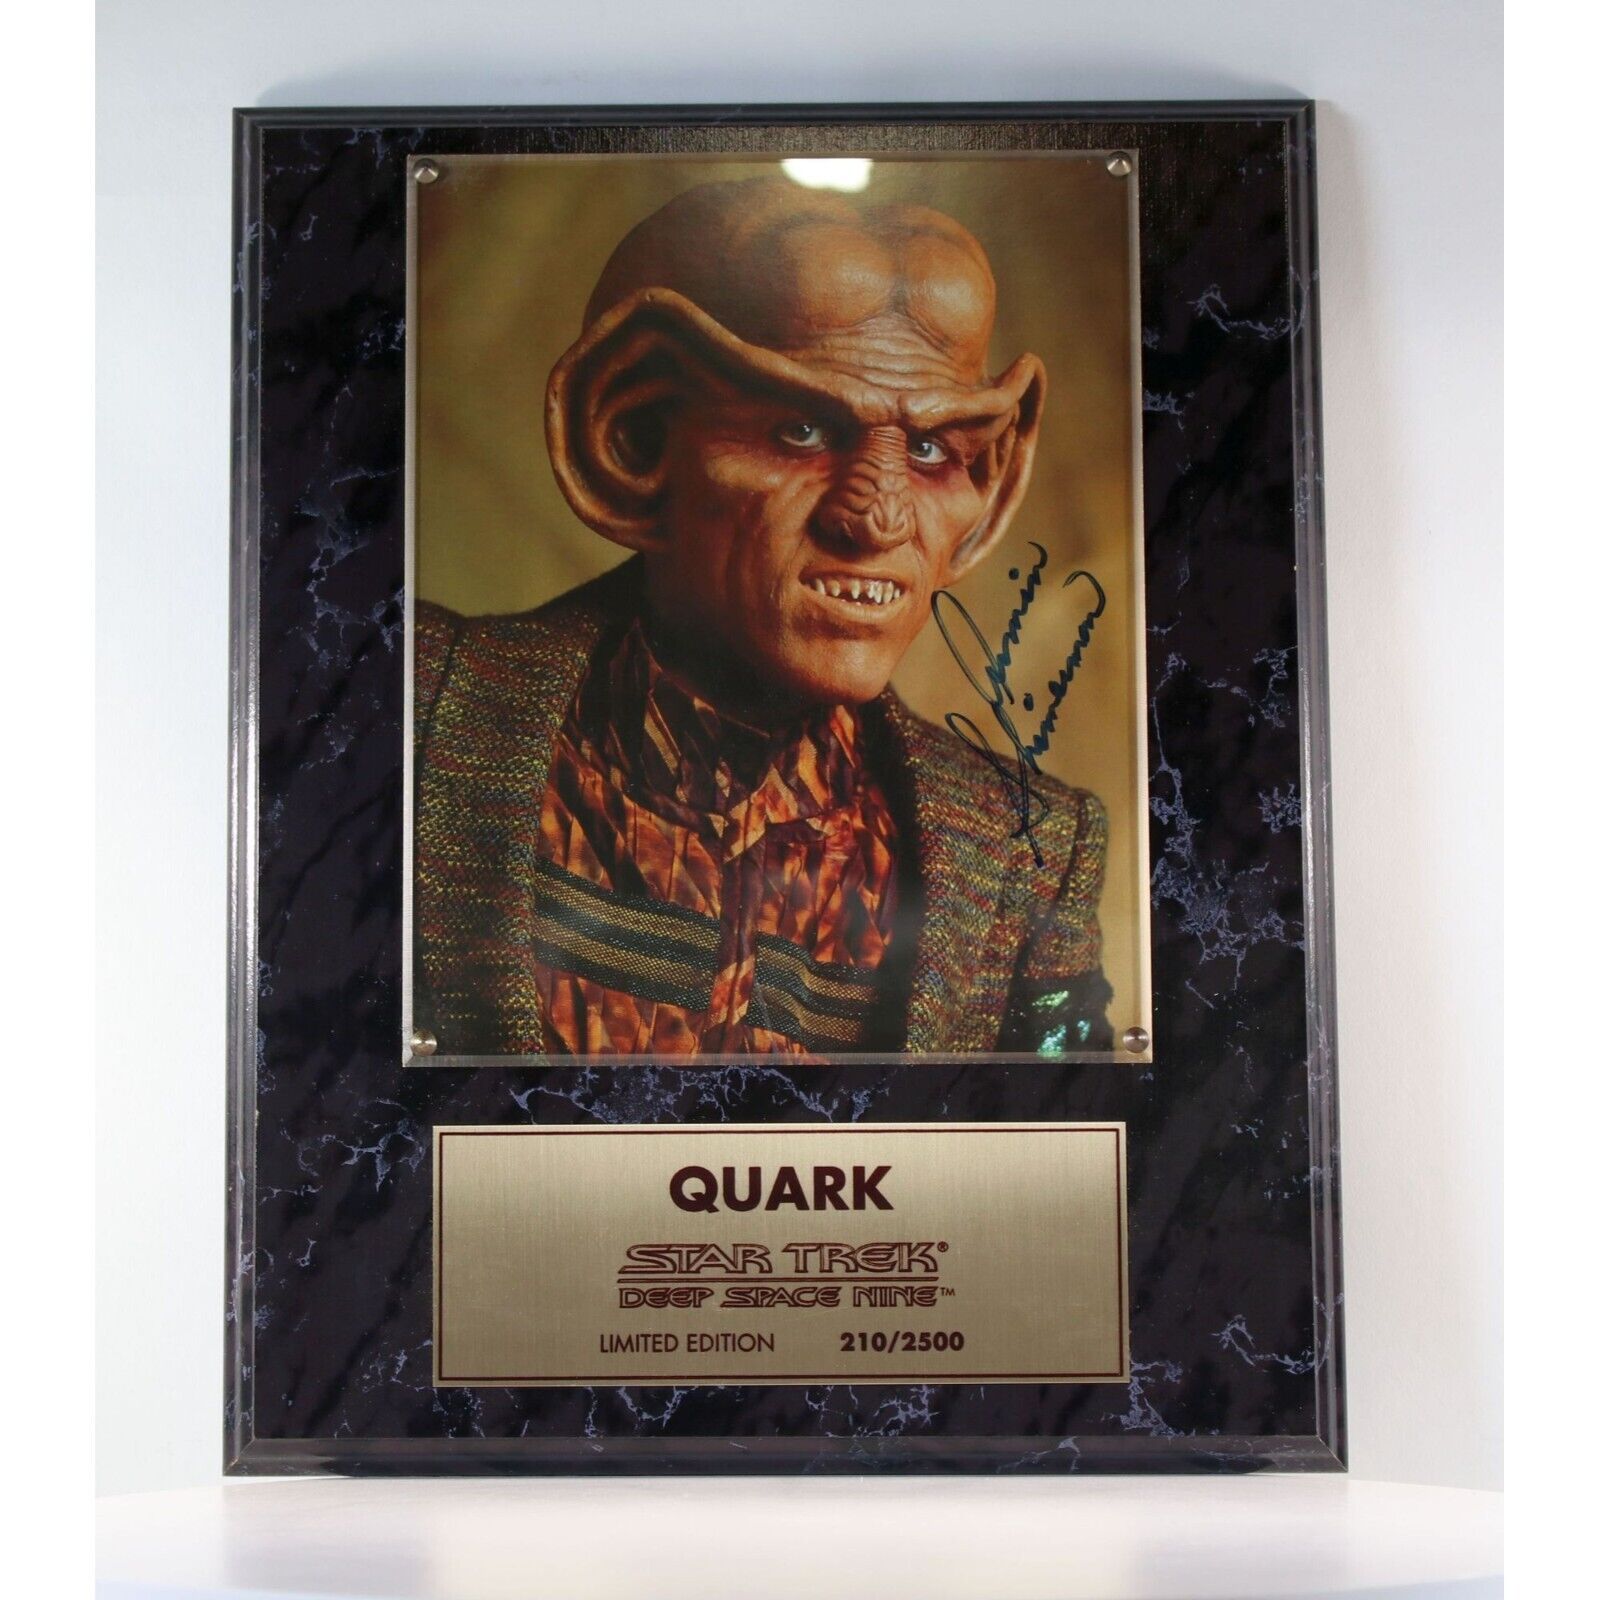 Armin Shimerman, Quark Star Trek Deep Space Nine Autographed Plaque 210/2500